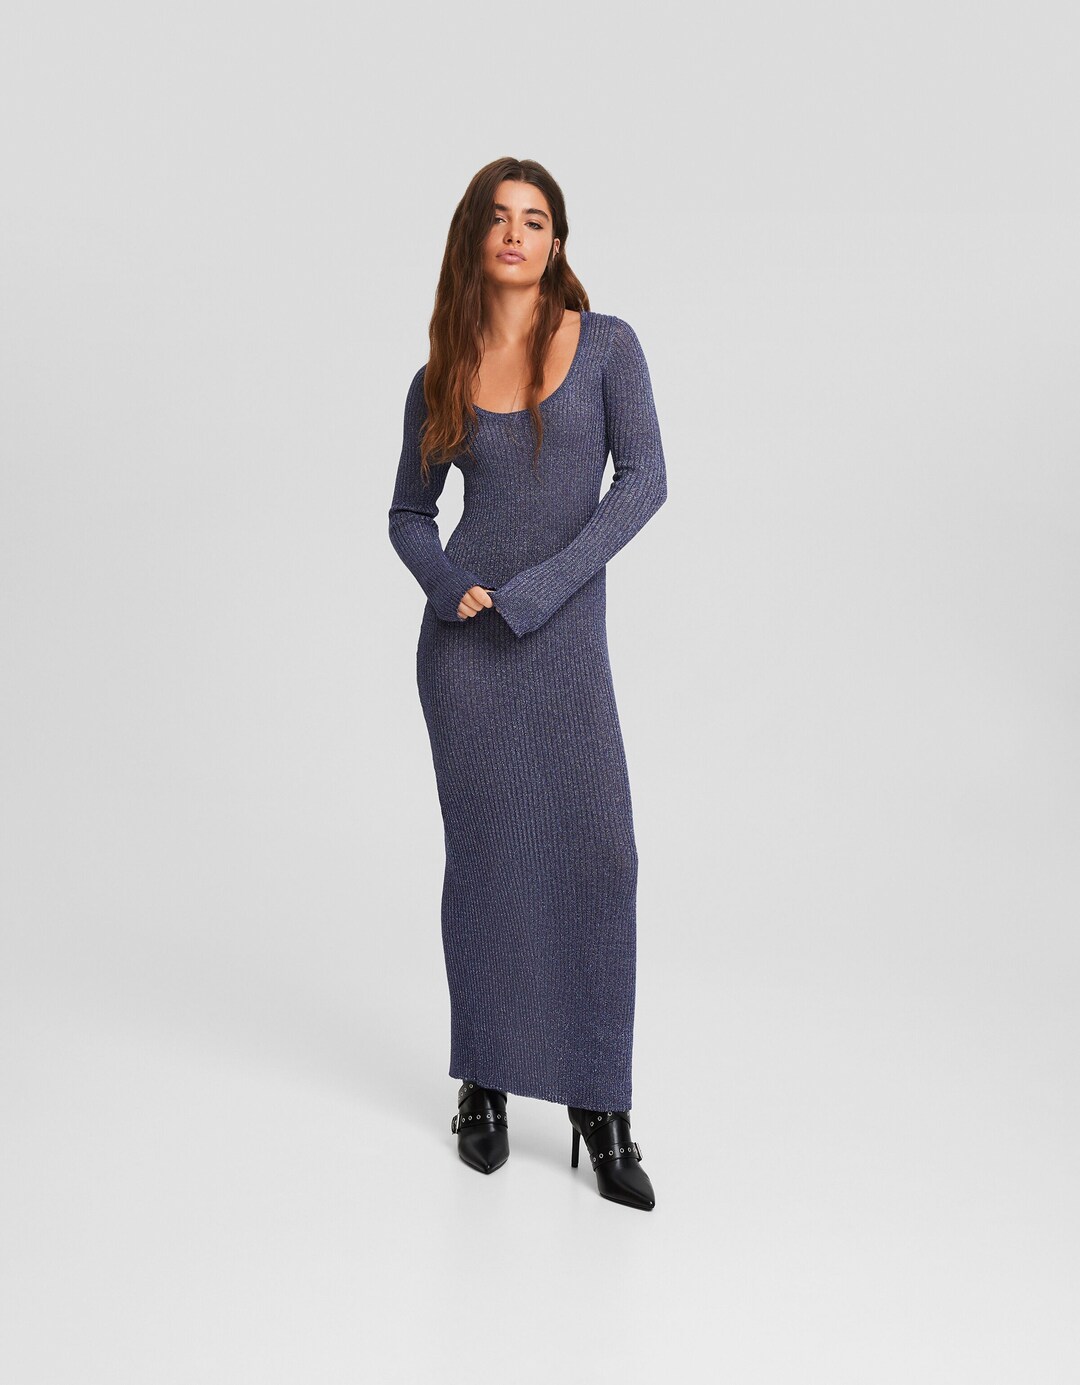 Shimmery long sleeve knit midi dress